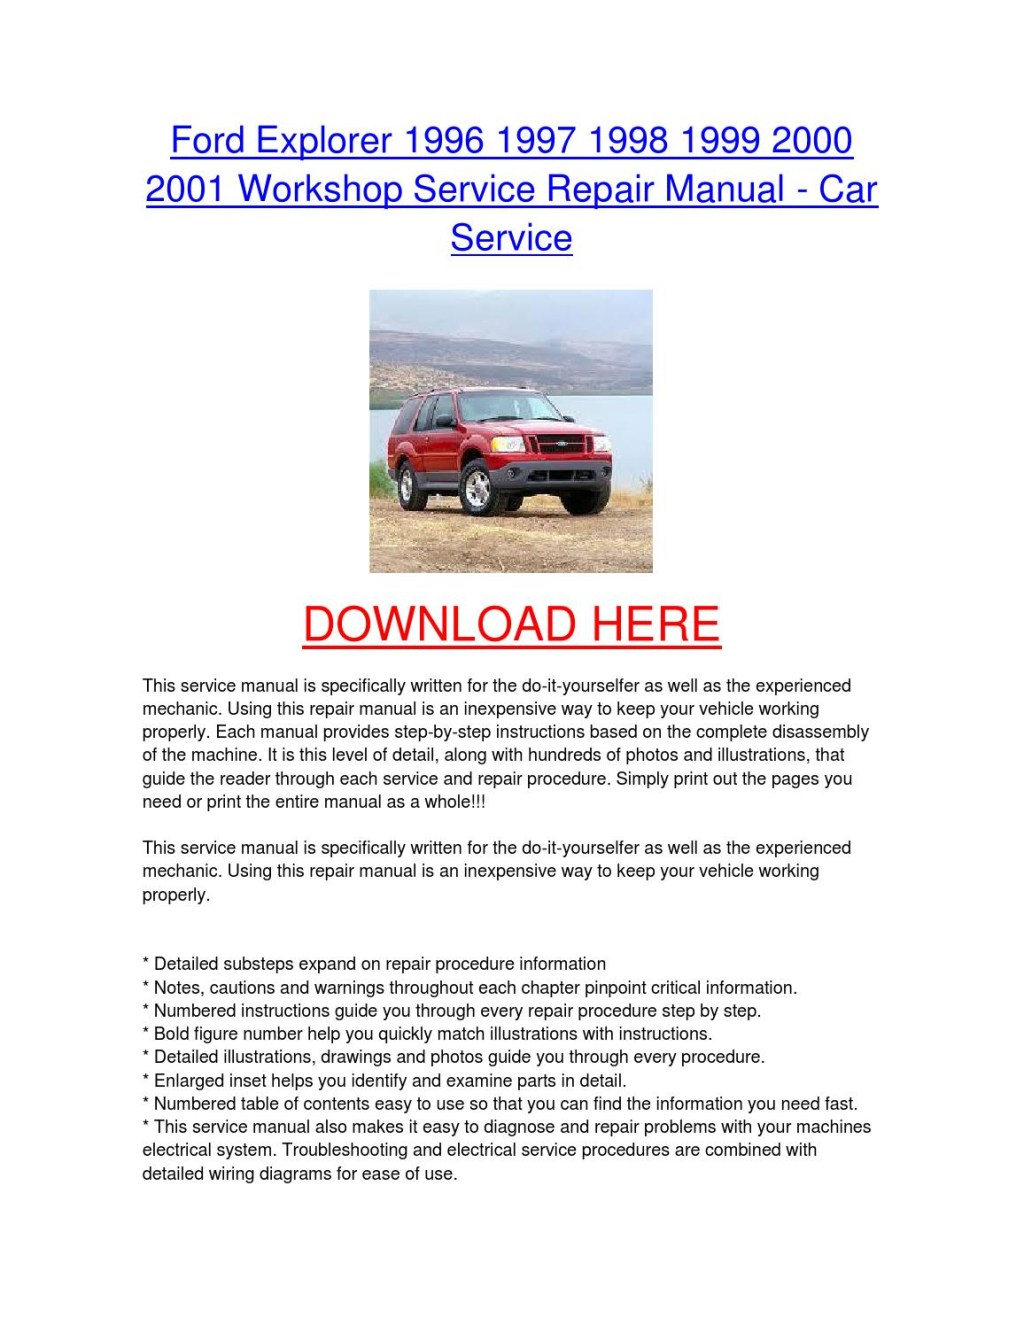 Picture of: Ford explorer       workshop service